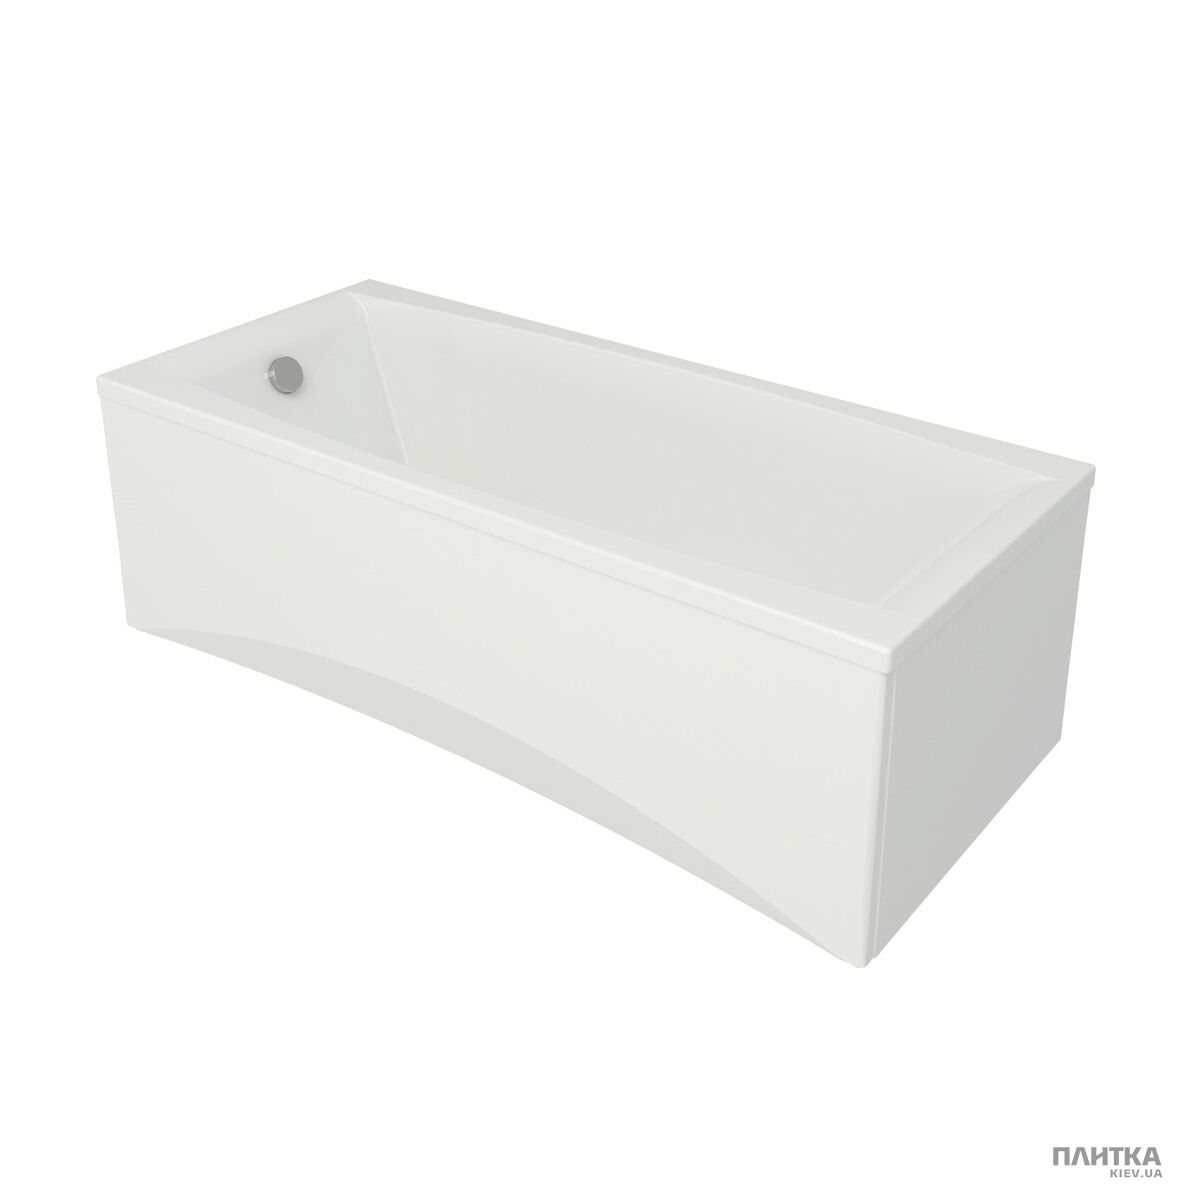 Акрилова ванна Cersanit Virgo 180x80 см білий